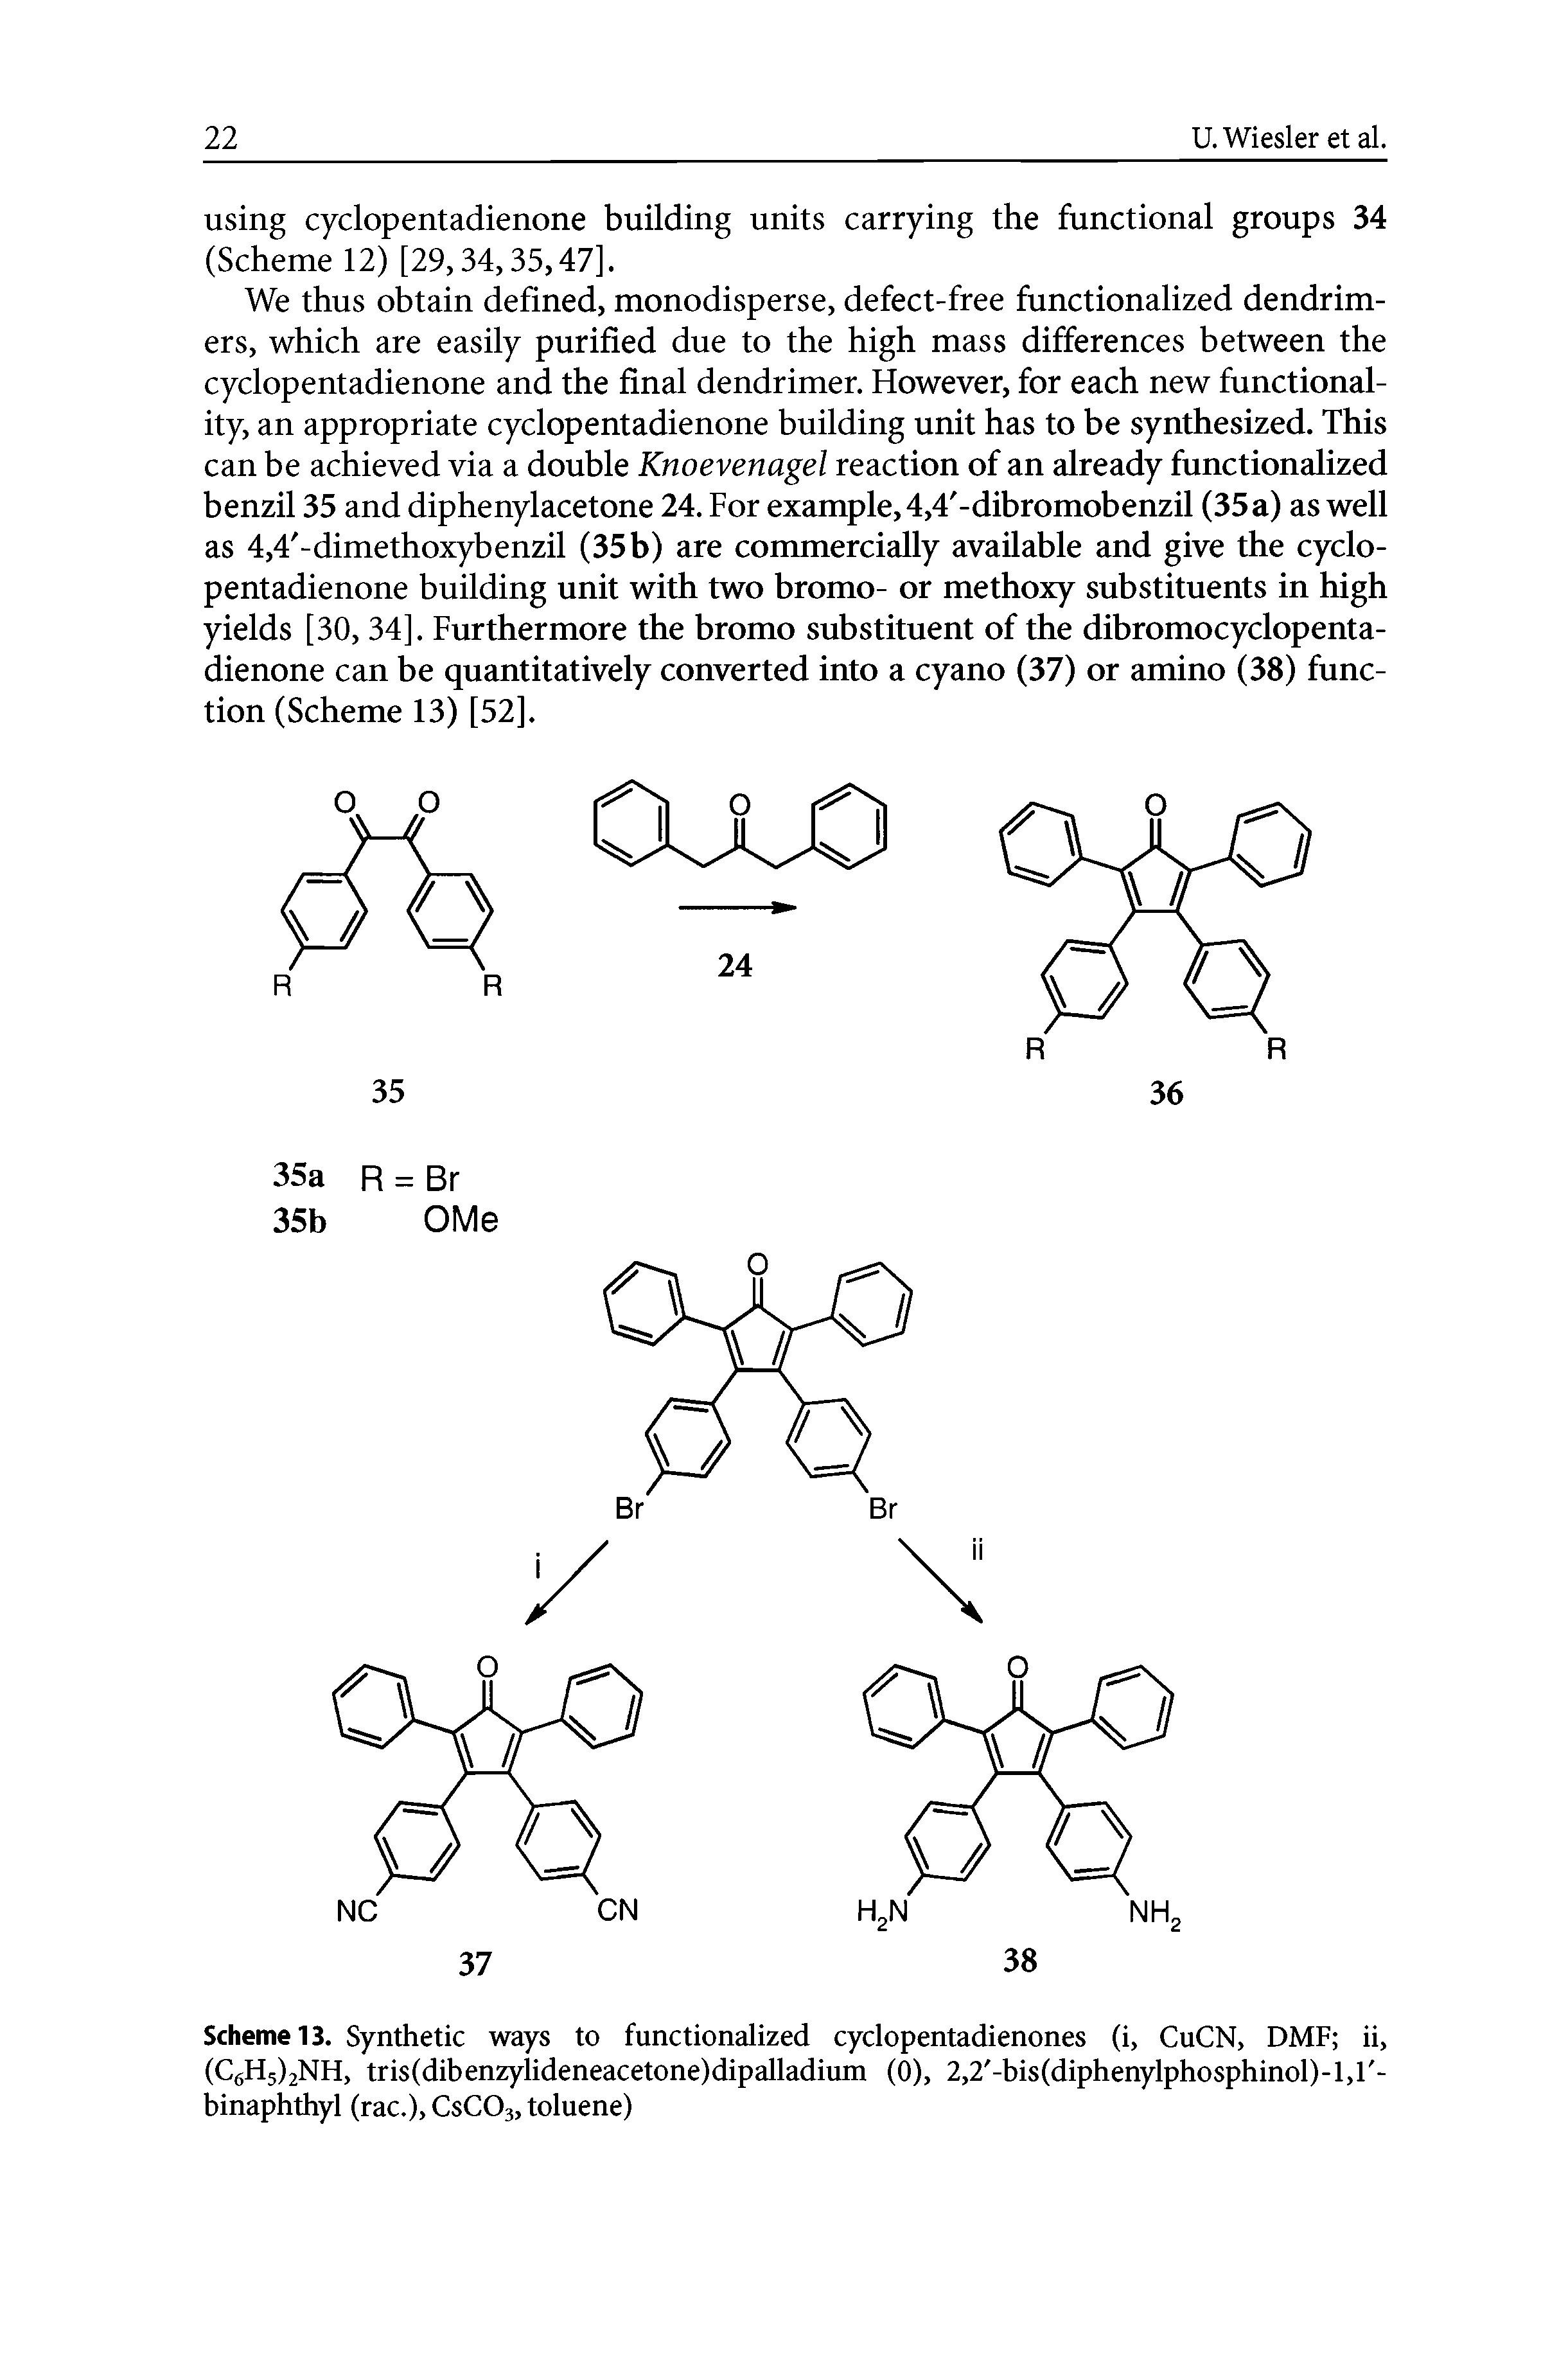 Scheme 13. Synthetic ways to functionalized cyclopentadienones (i, CuCN, DMF ii, (CgH5)2NH, tris(dibenzylideneacetone)dipalladium (0), 2,2 -bis(diphenylphosphinol)-l,l -binaphthyl (rac.), CsCOj, toluene)...